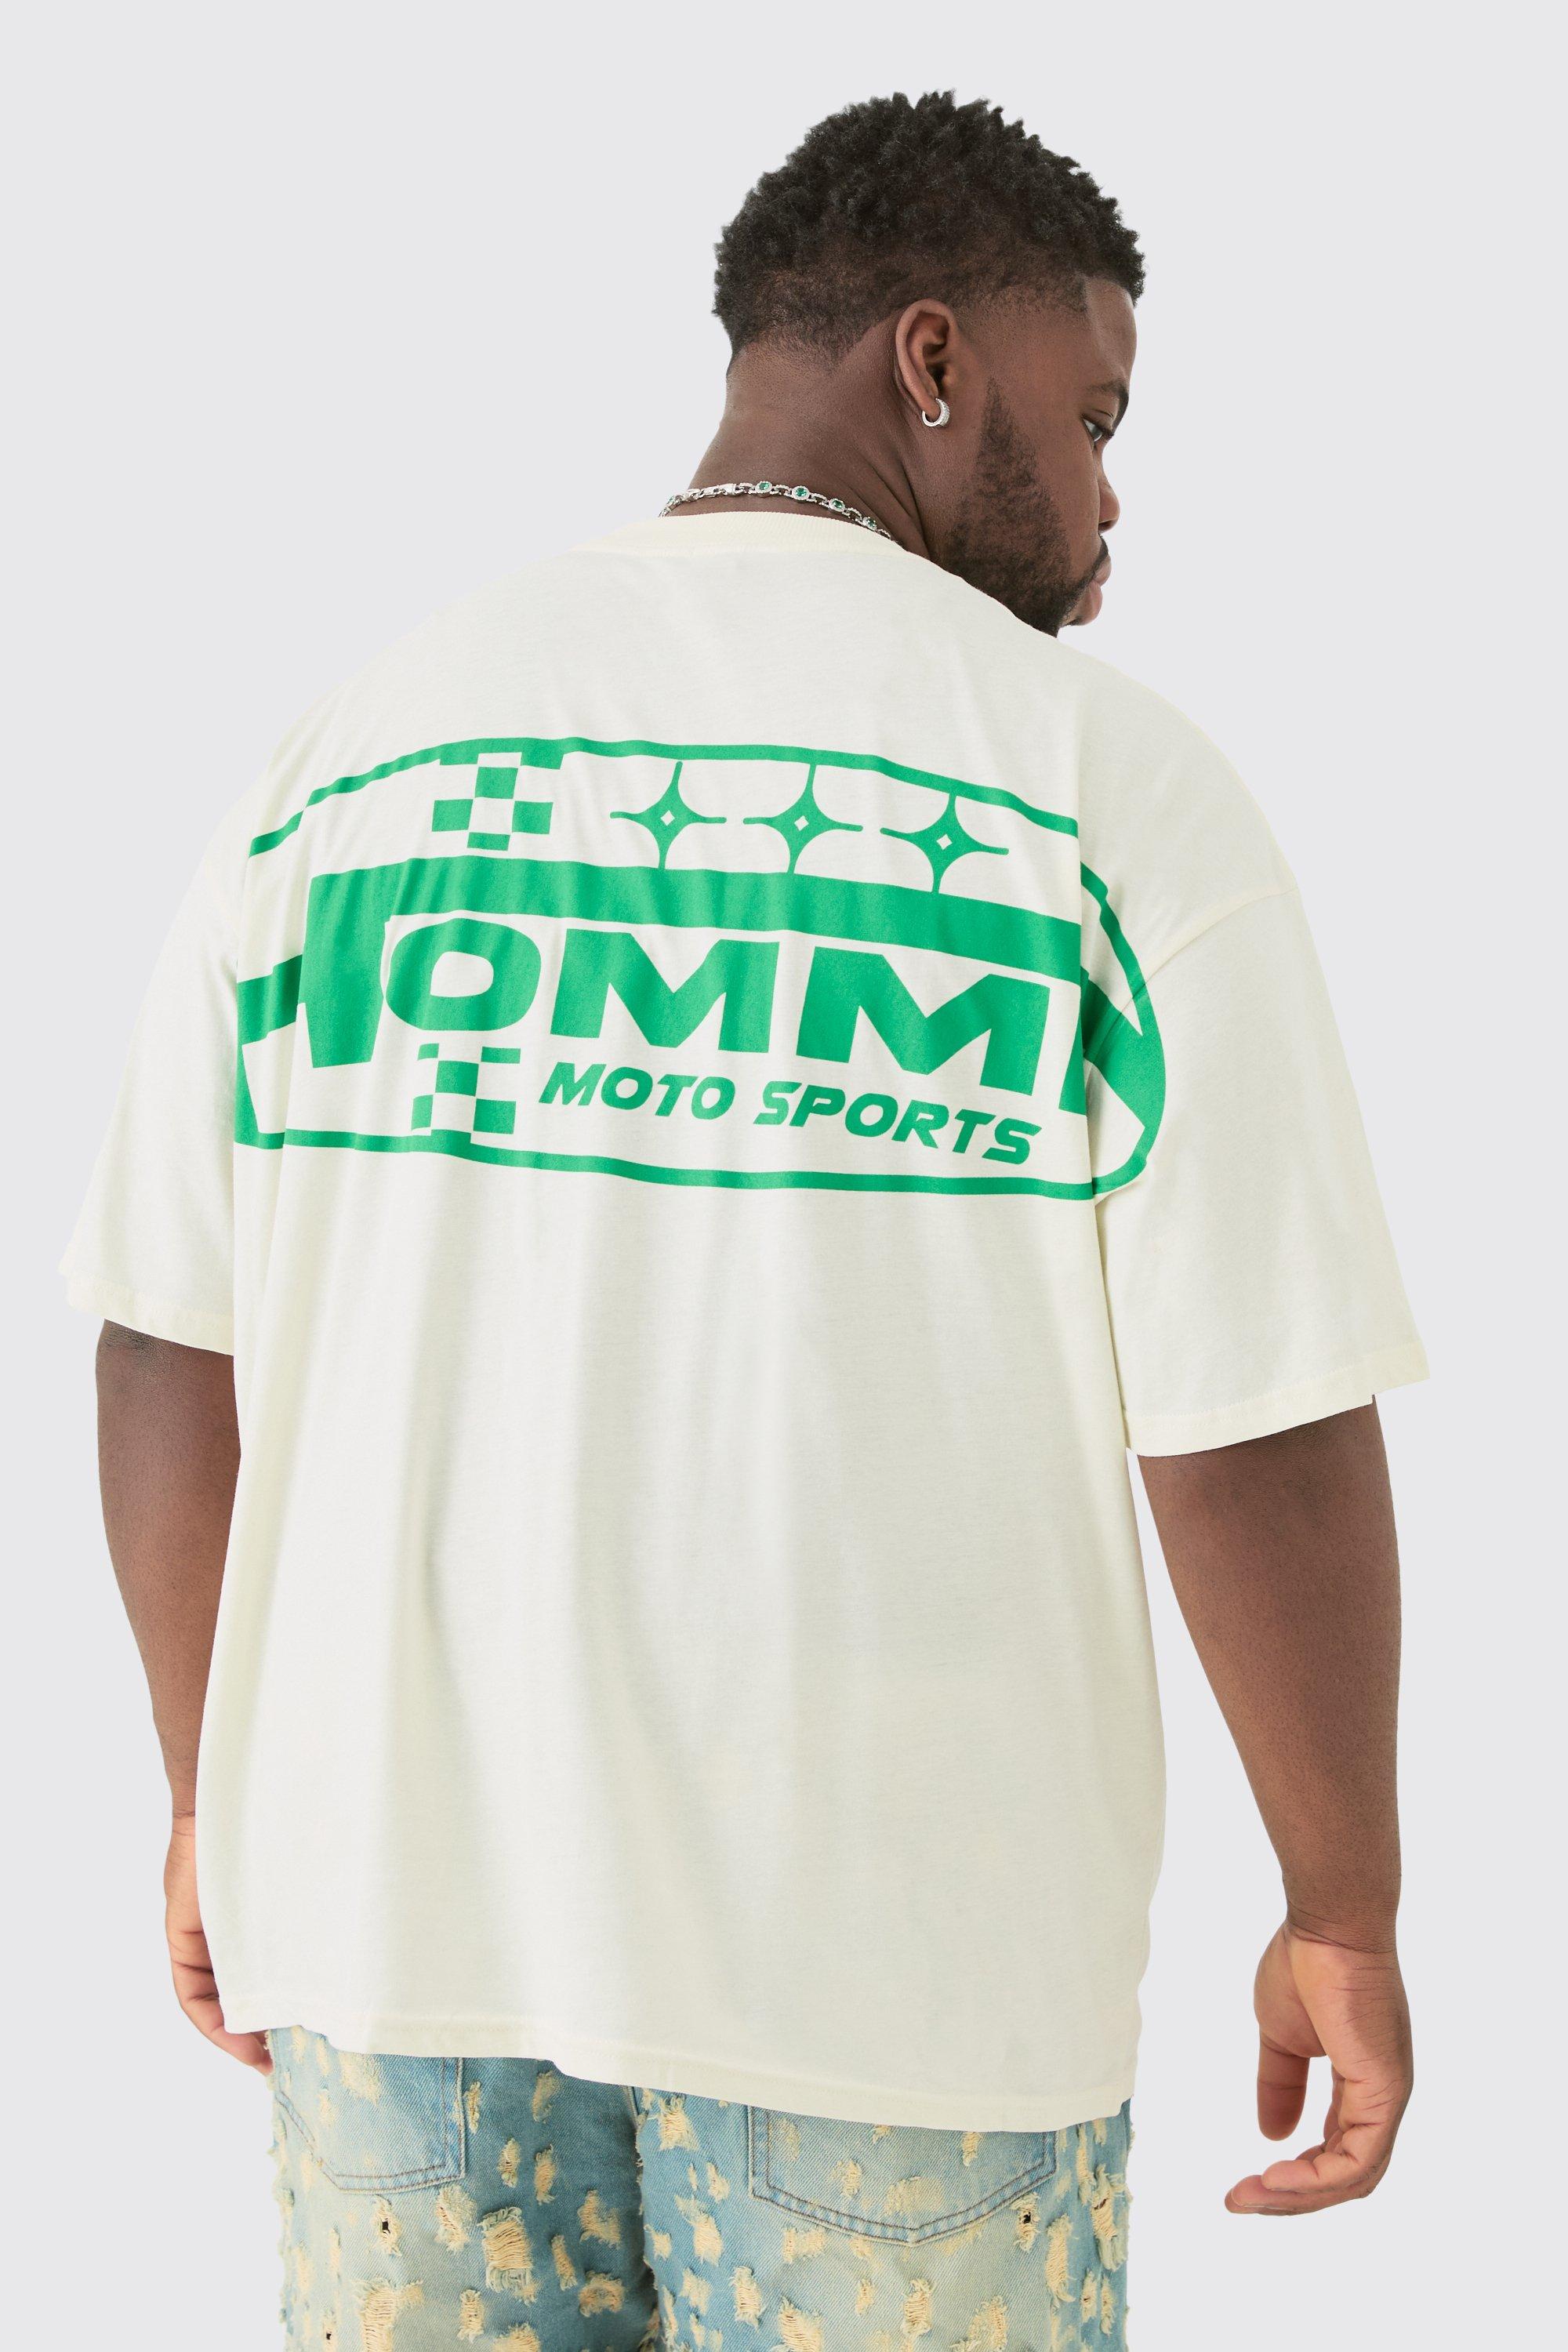 Image of Plus Homme Moto Sports Graphic T-shirt In Ecru, Cream